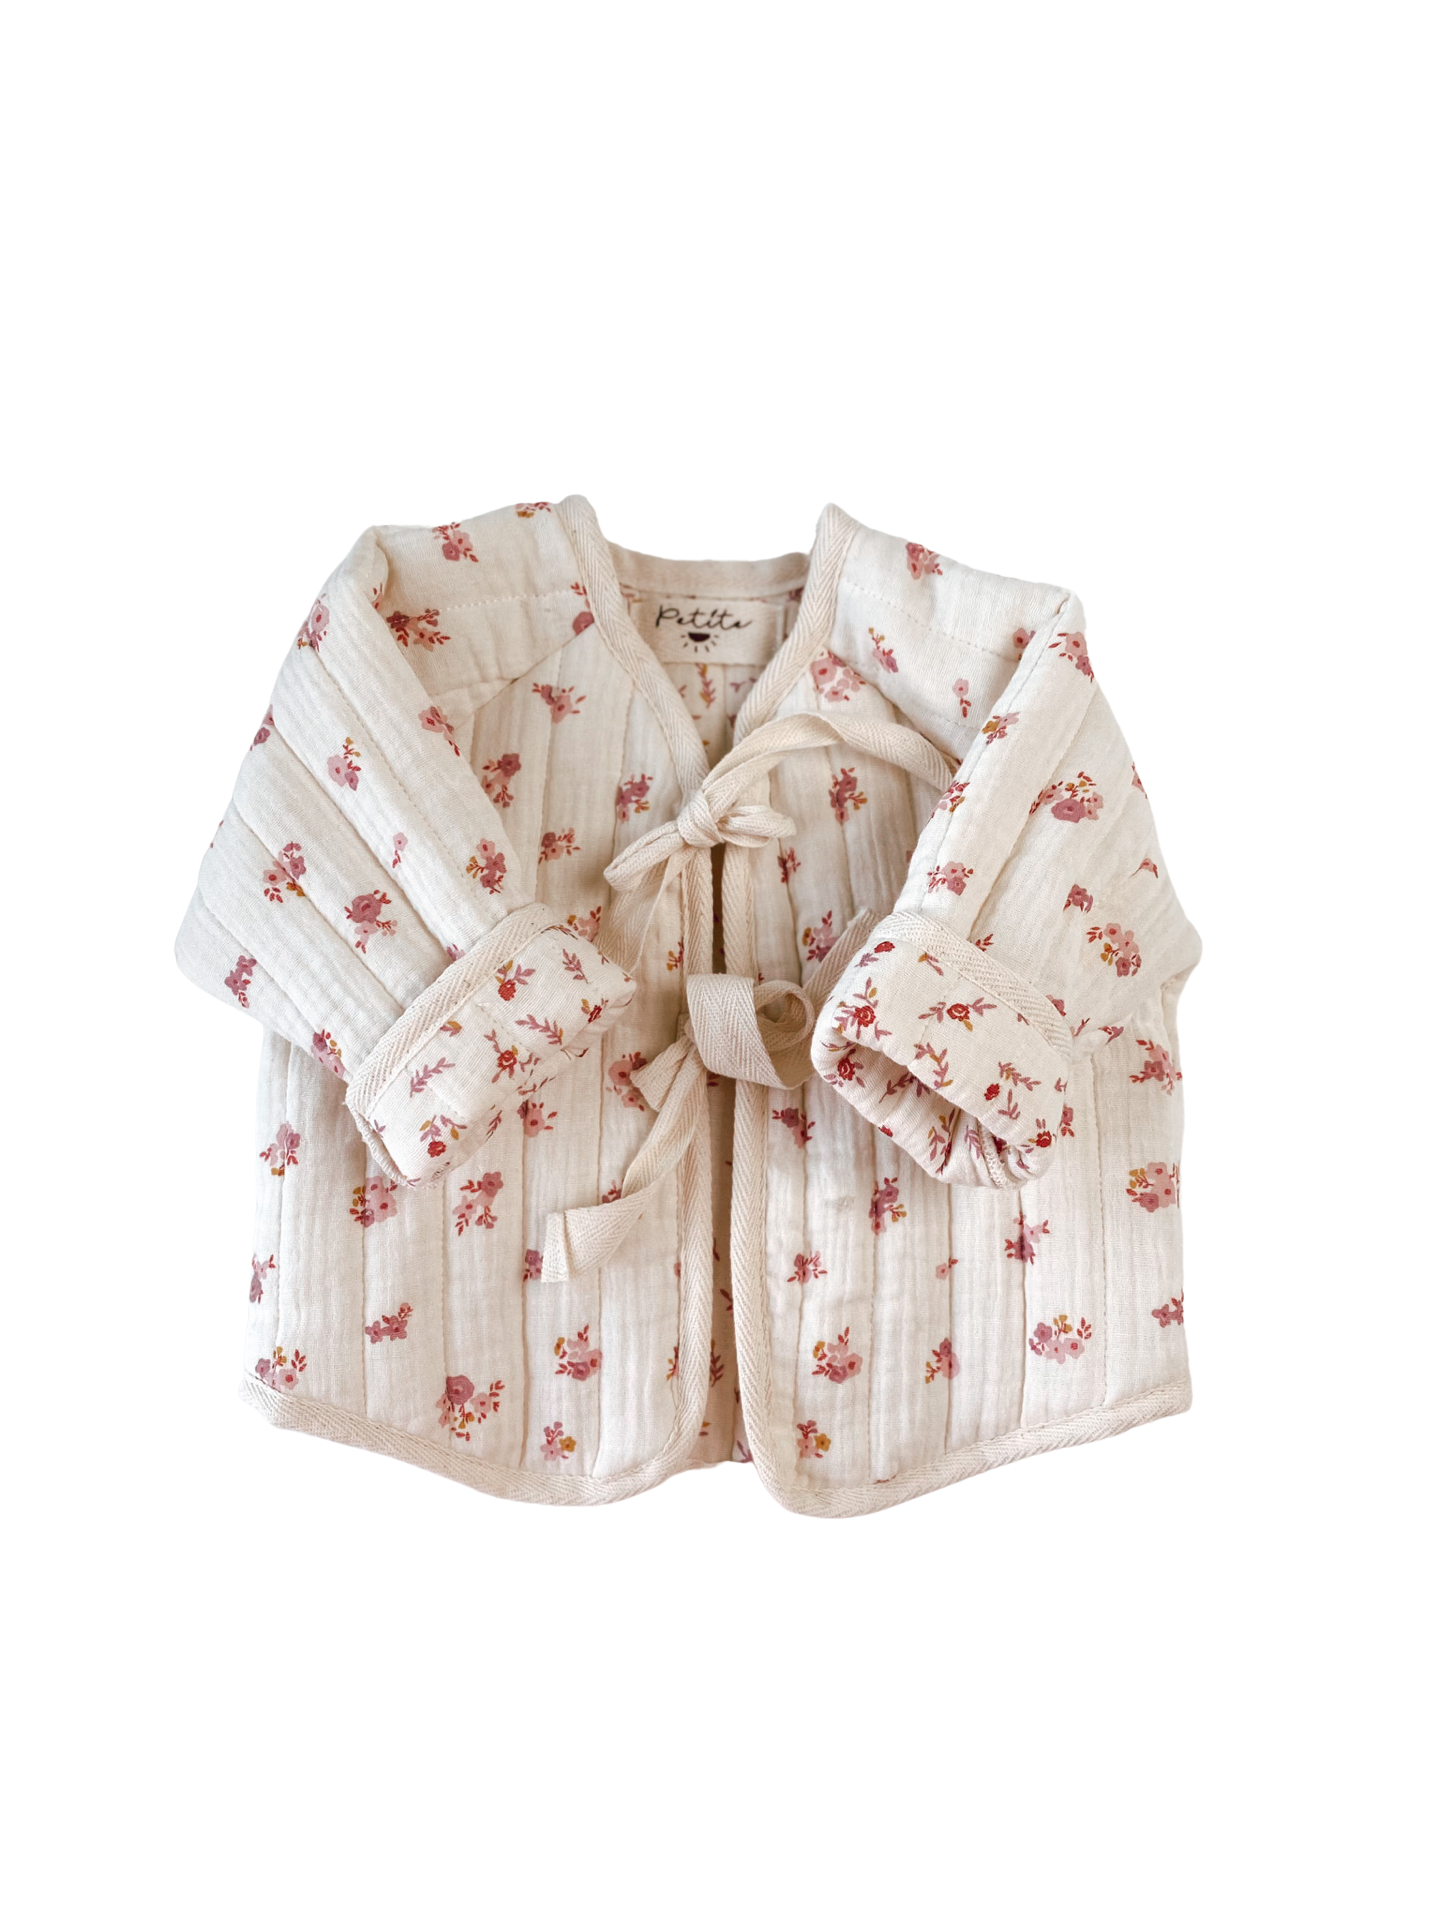 Baby & toddler quilted jacket - rose floral